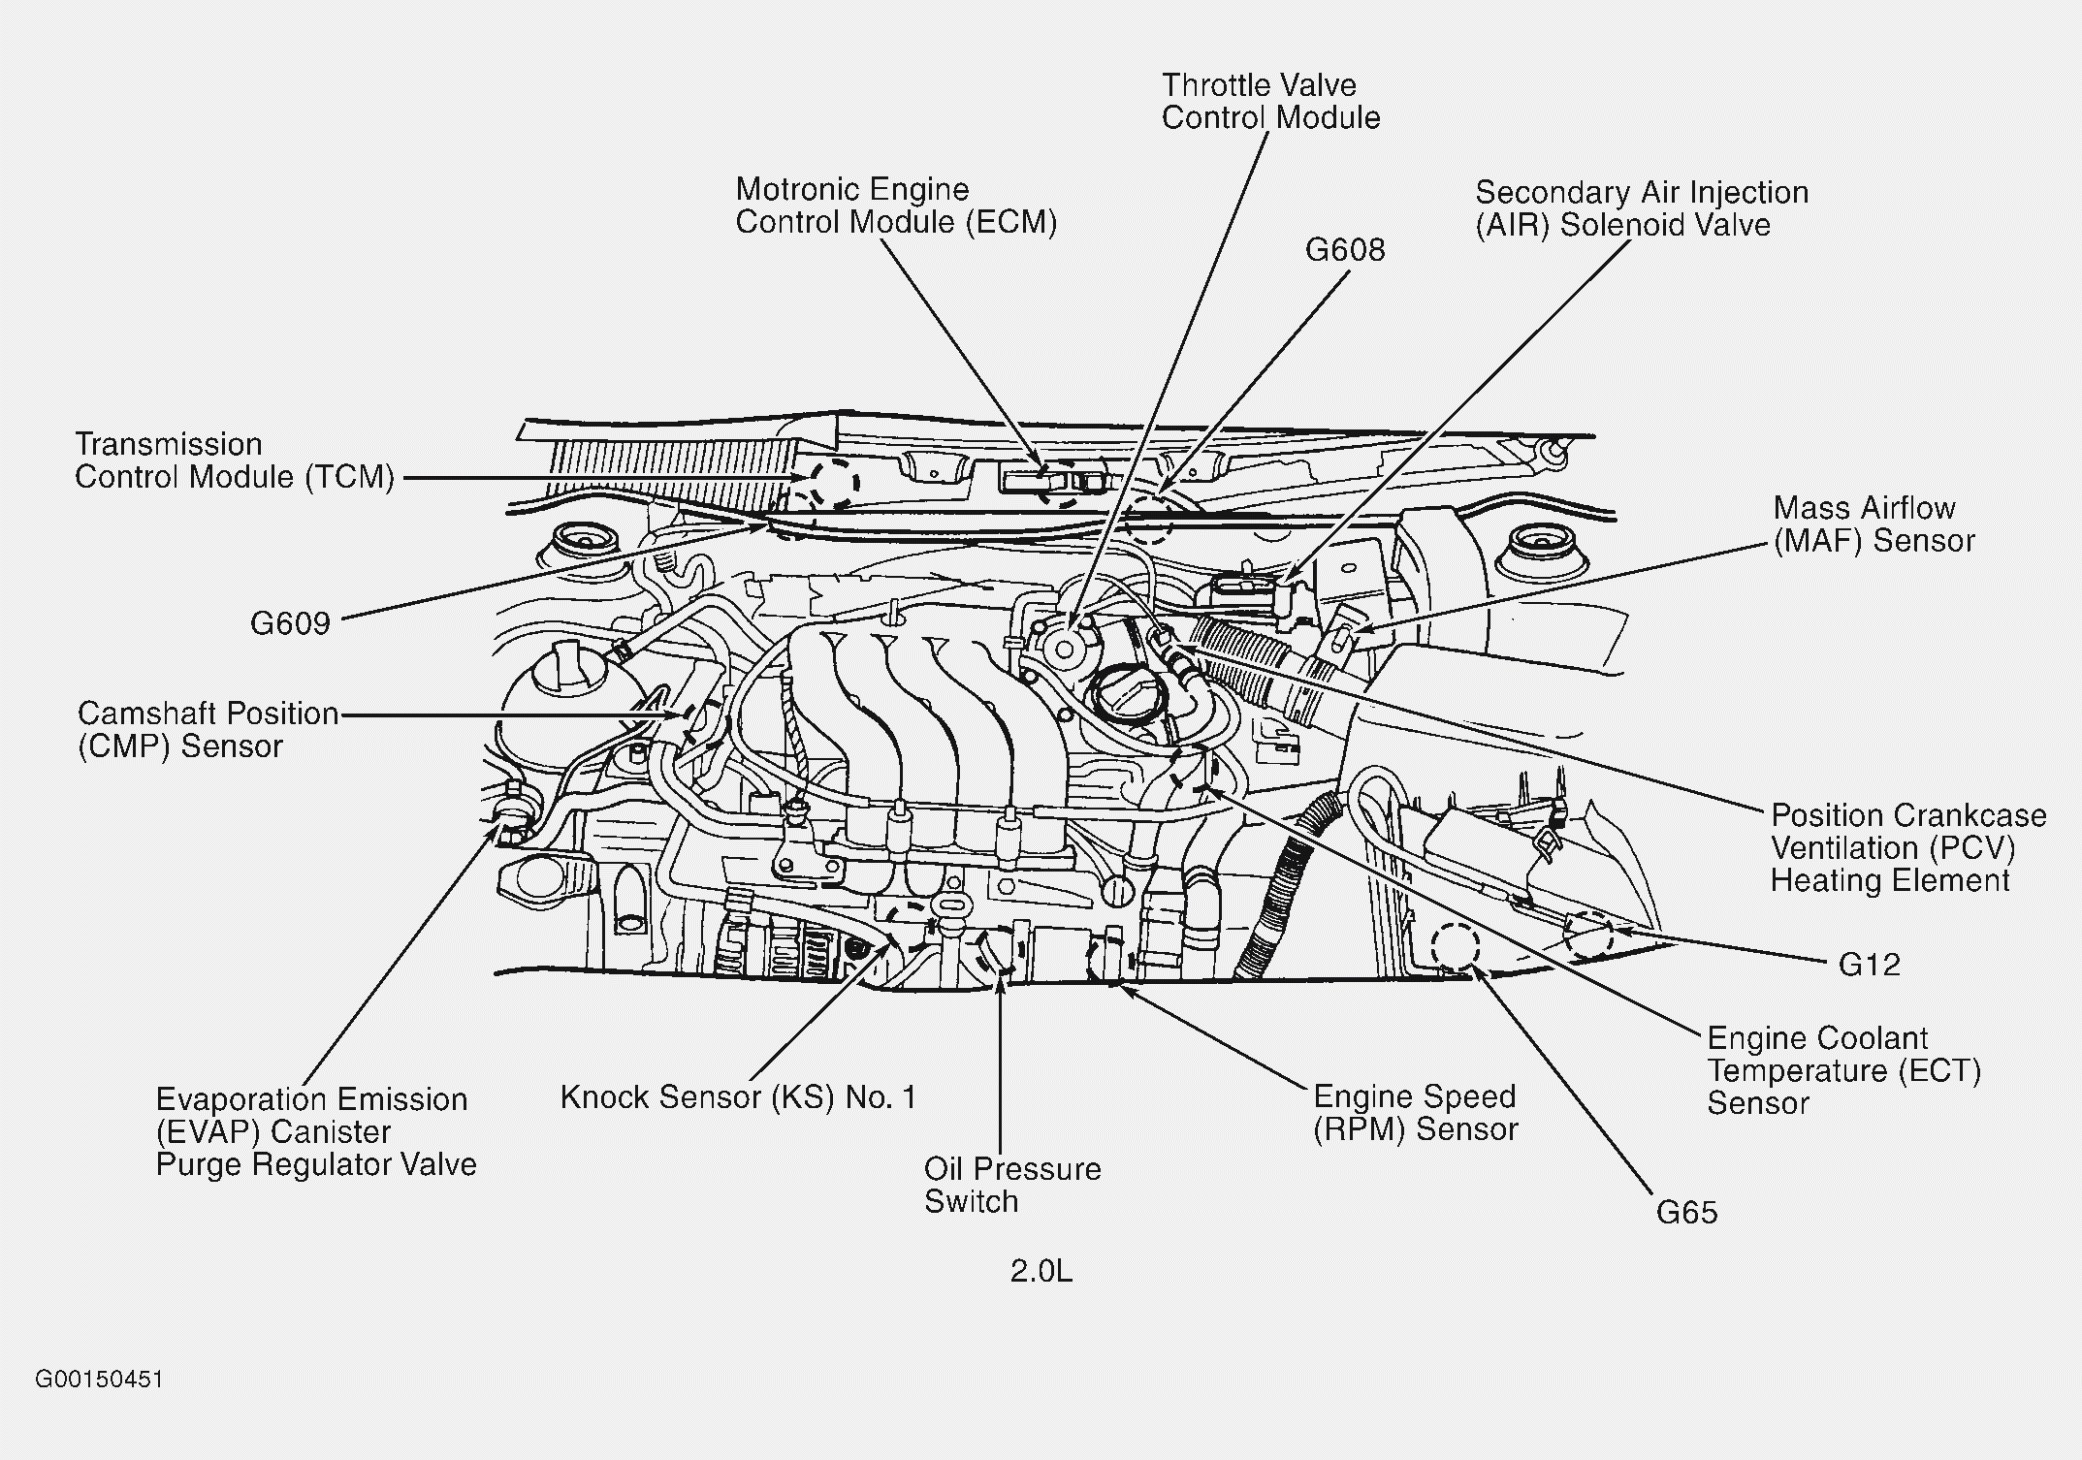 Saab 9 3 Engine Diagram 2 Jetta 2 5 Engine Fuse Diagram Schema Wiring Diagram Of Saab 9 3 Engine Diagram 2